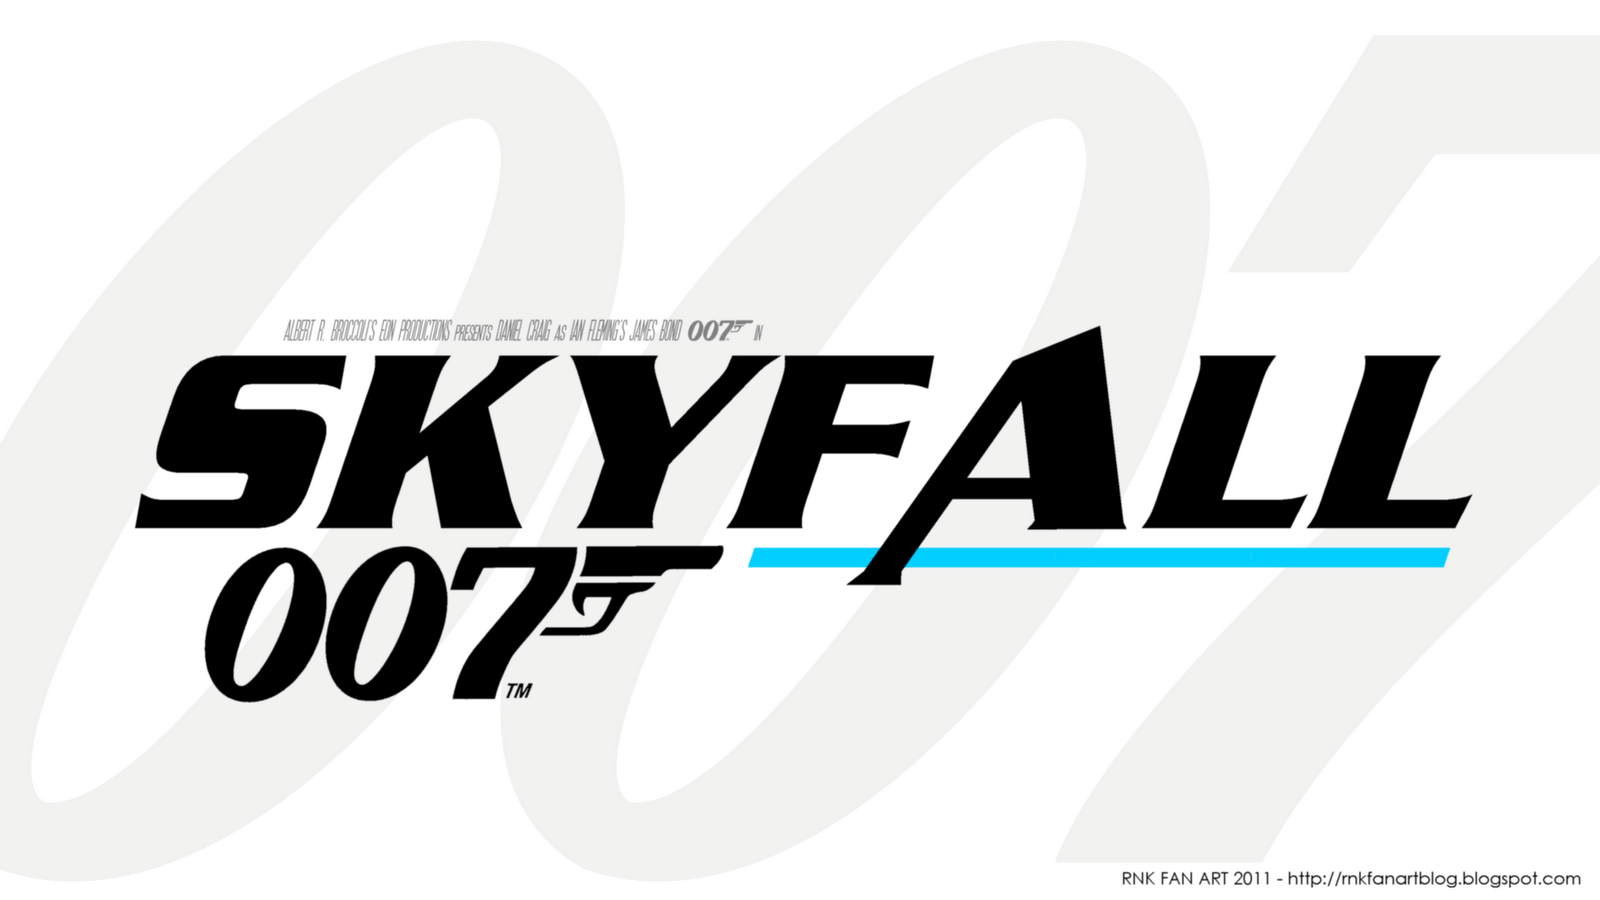 James Bond Skyfall 007 Wallpaper [2012]